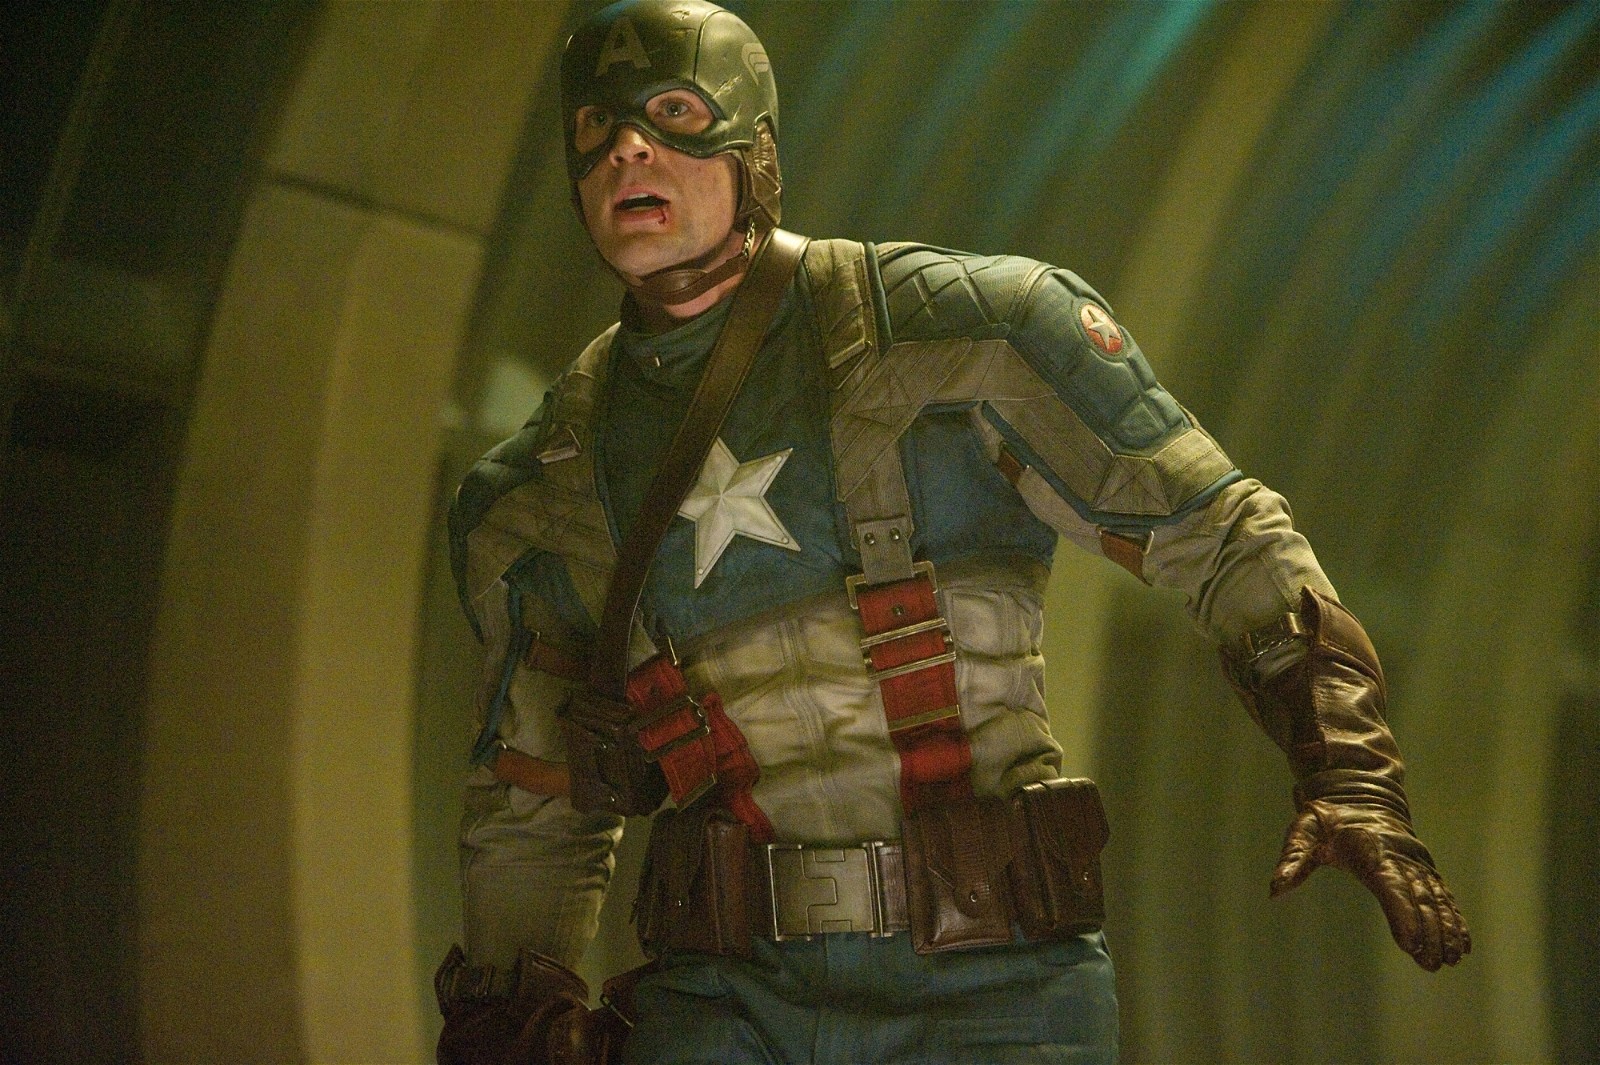 Chris Evans as Steve Rogers in a still from Captain America: The First Avenger 